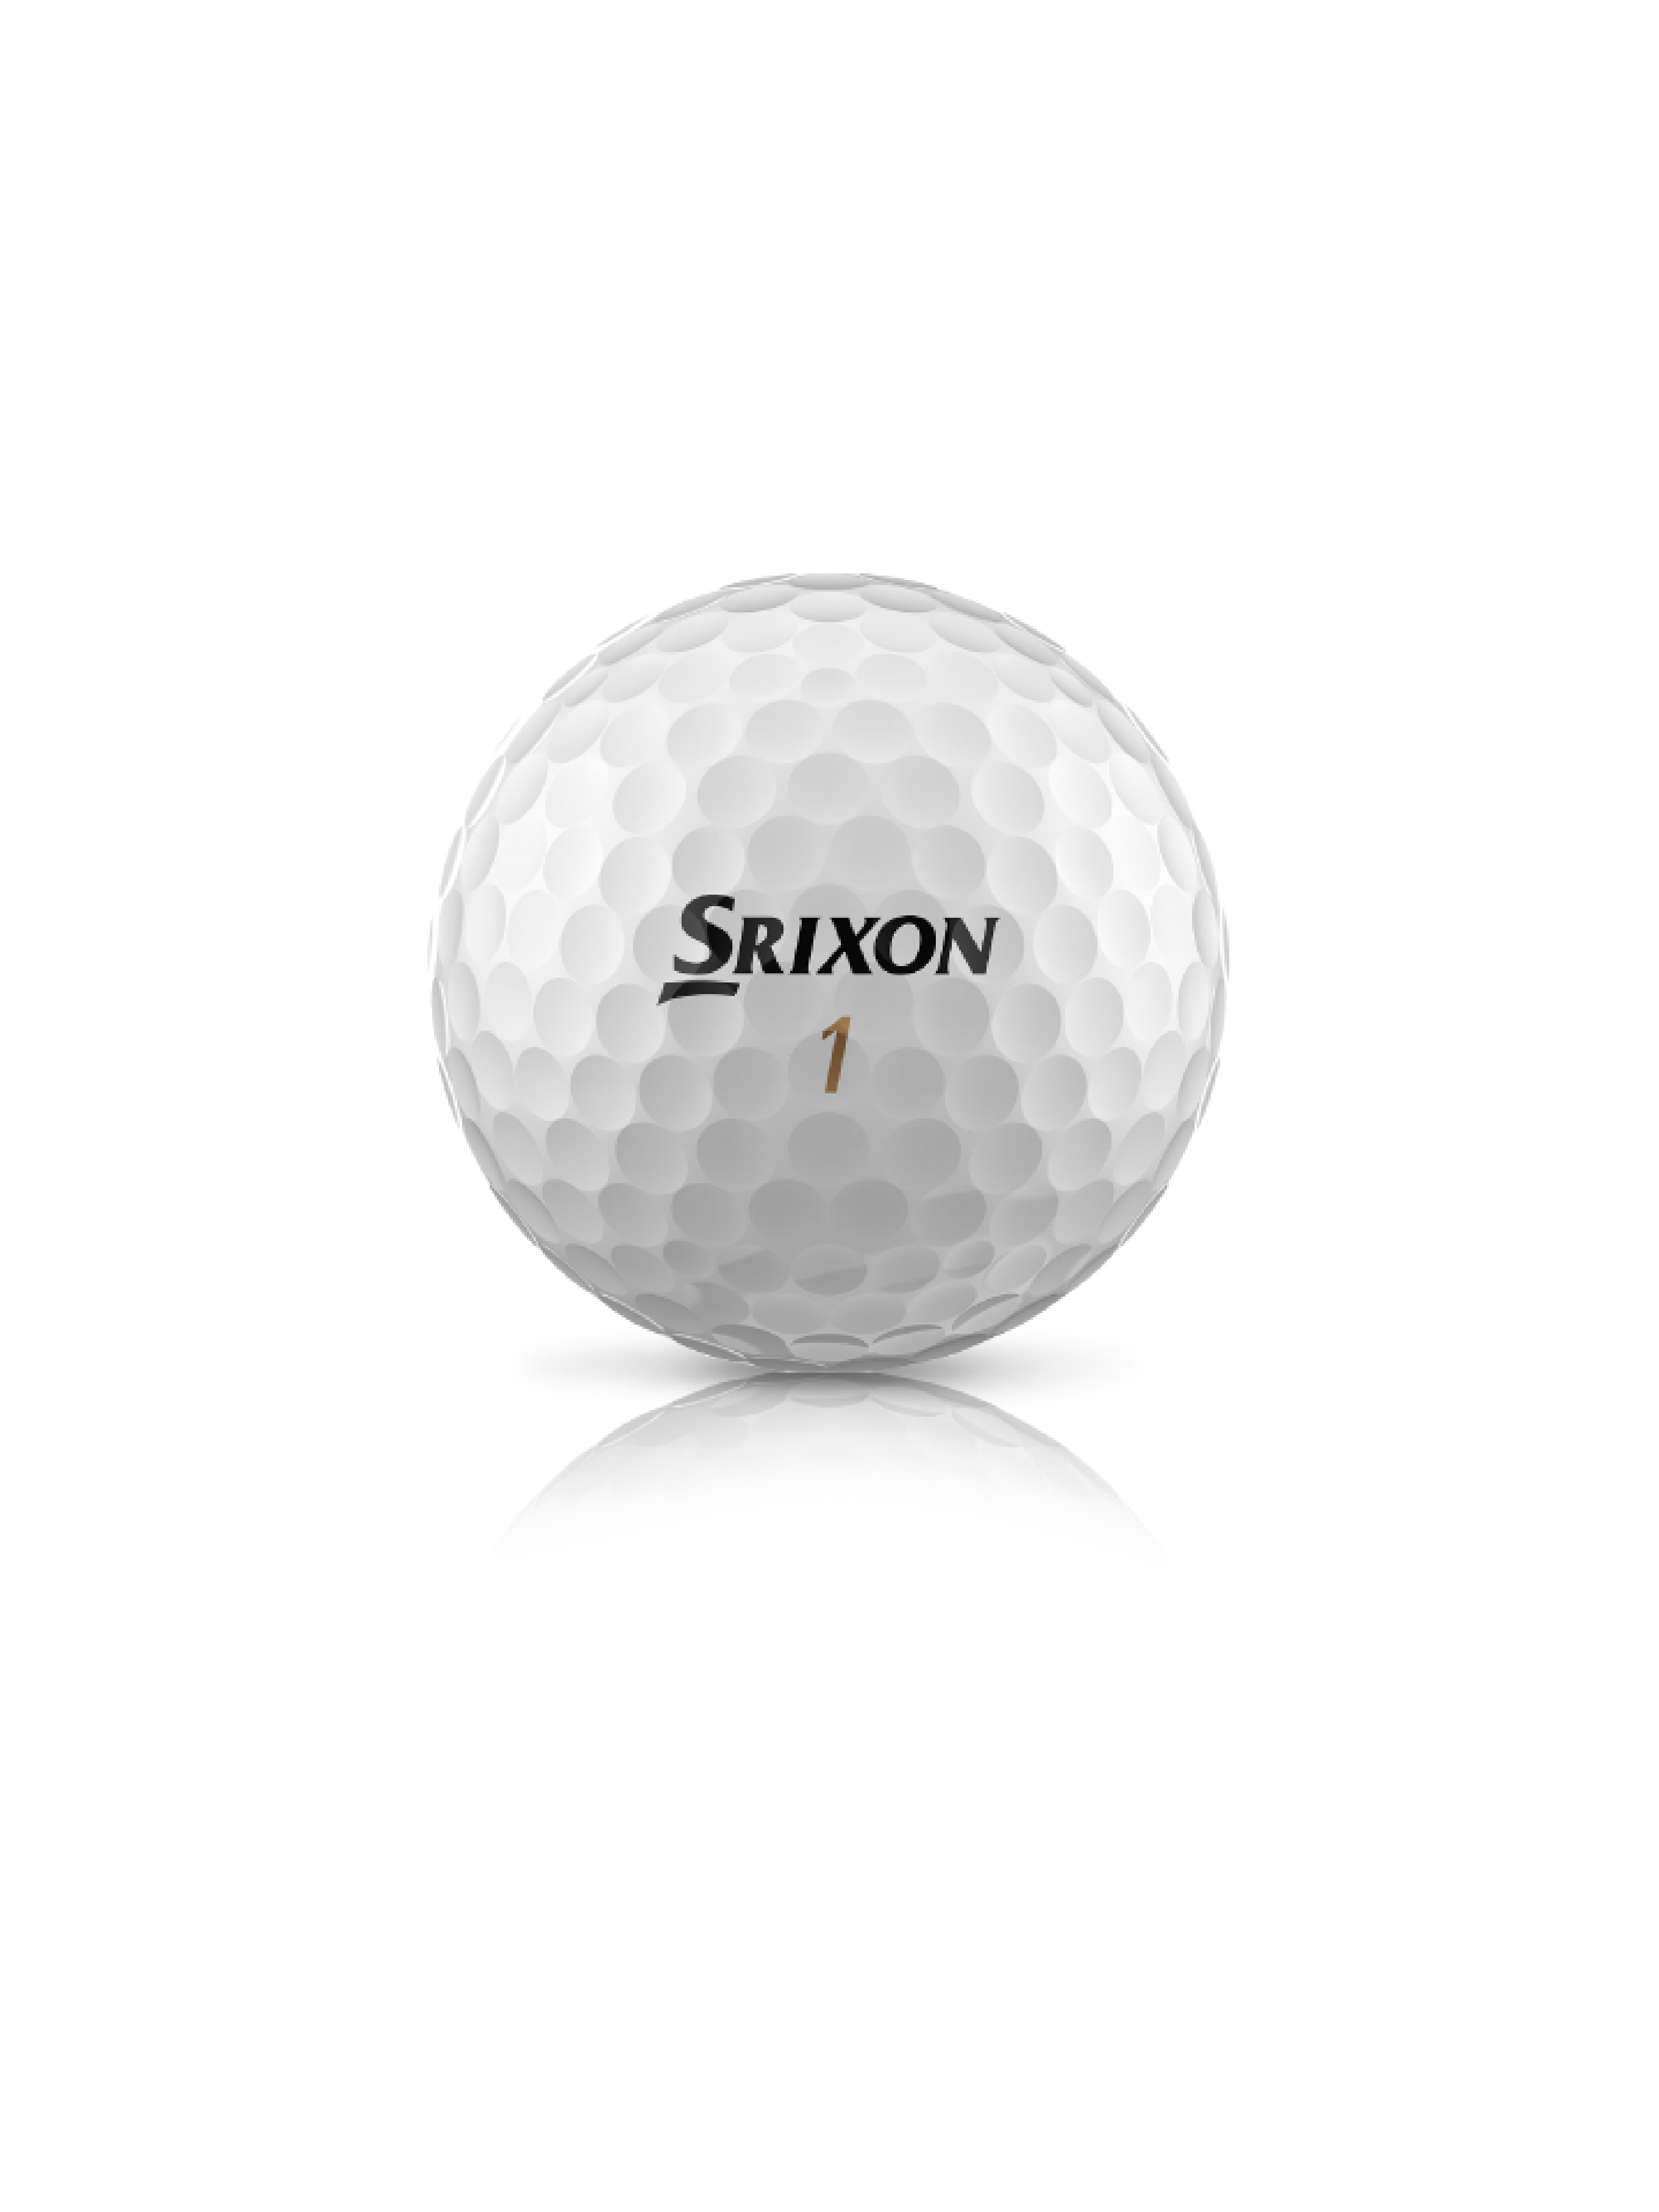 SRIXON【鑽石版】Z-STAR ♢ DIAMOND 絕佳控球性高爾夫球, 3層球(白球)